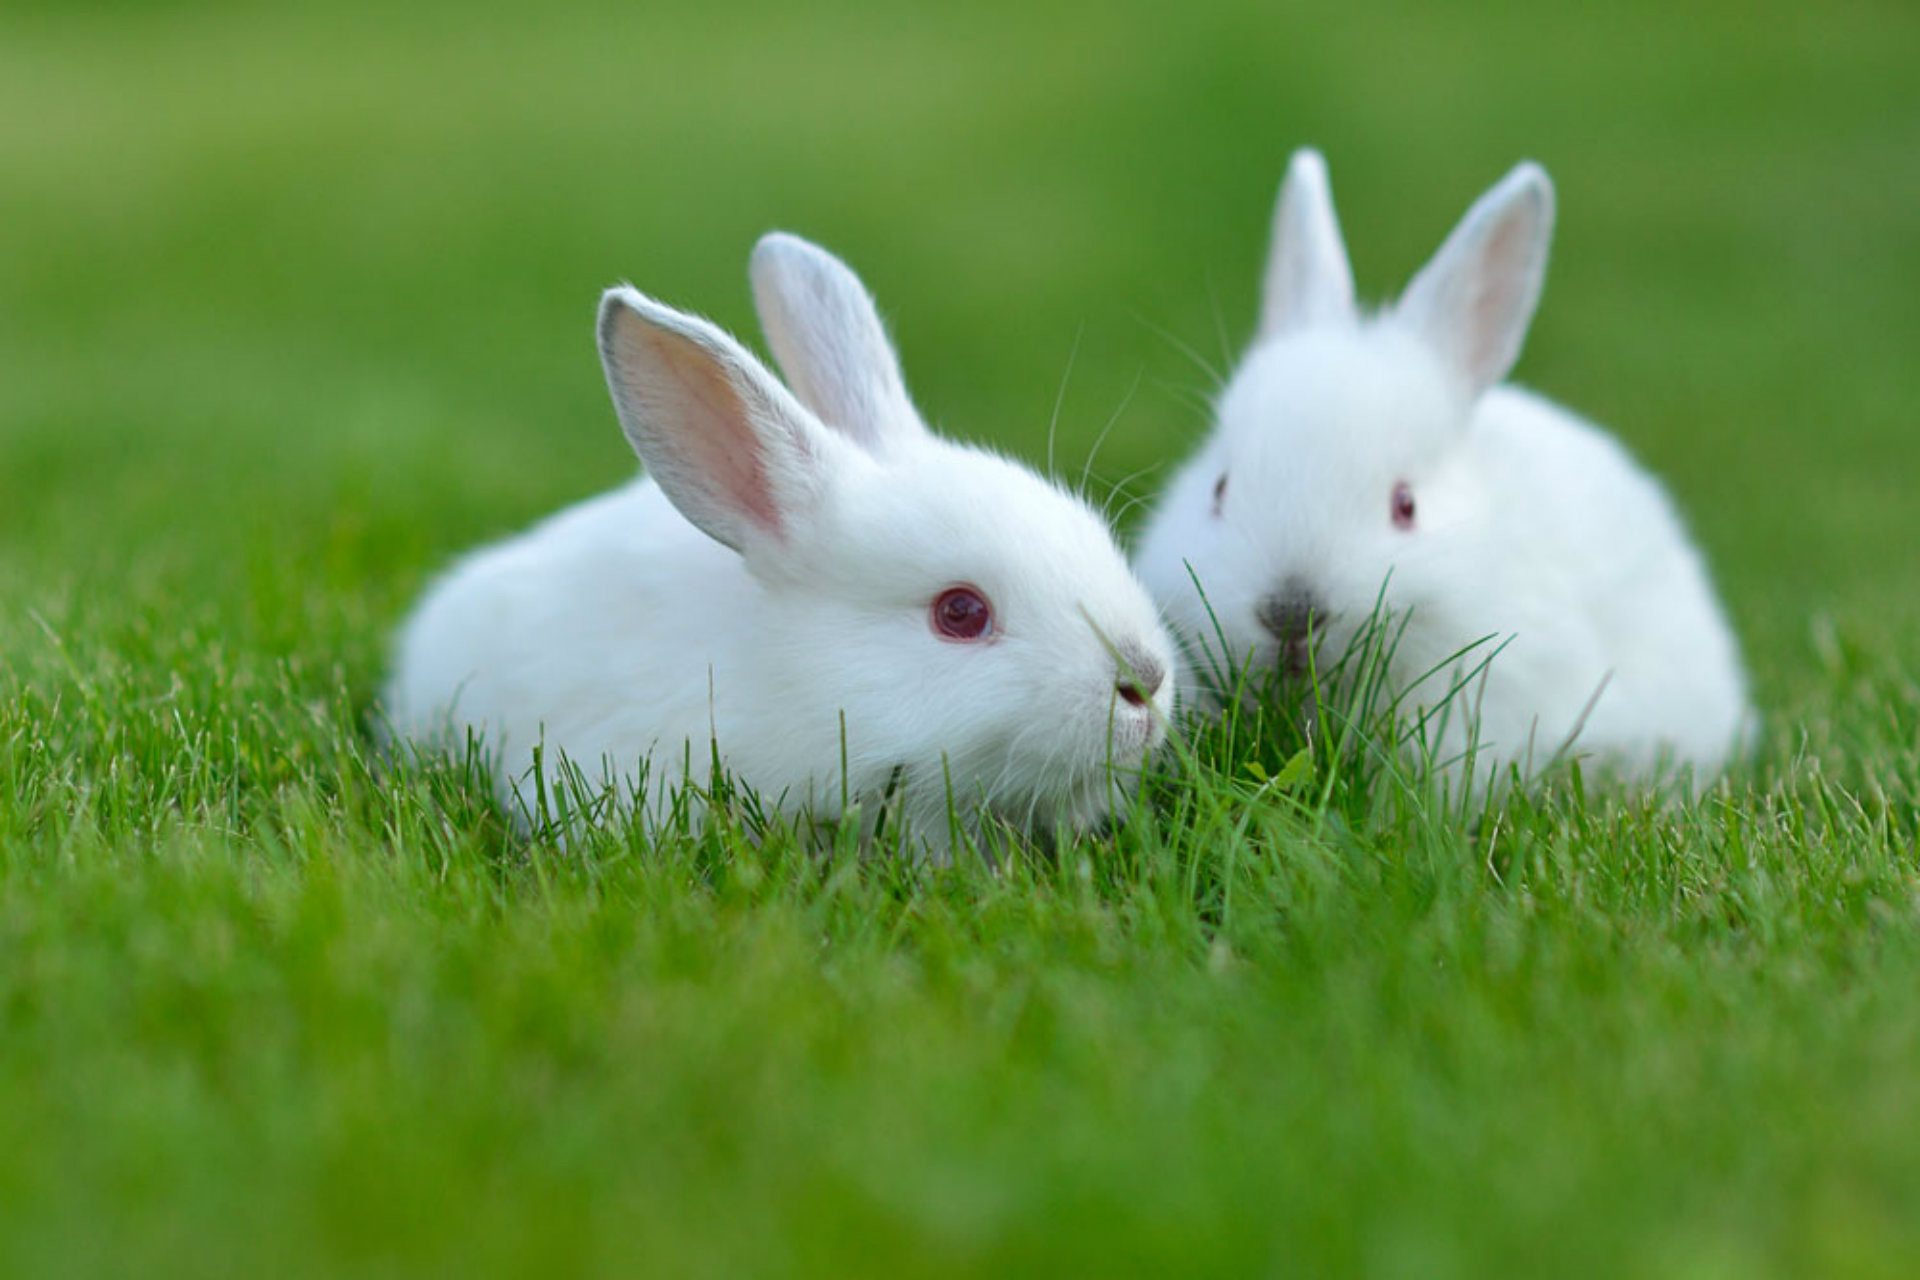 rabbit wallpaper,rabbit,domestic rabbit,rabbits and hares,grass,hare